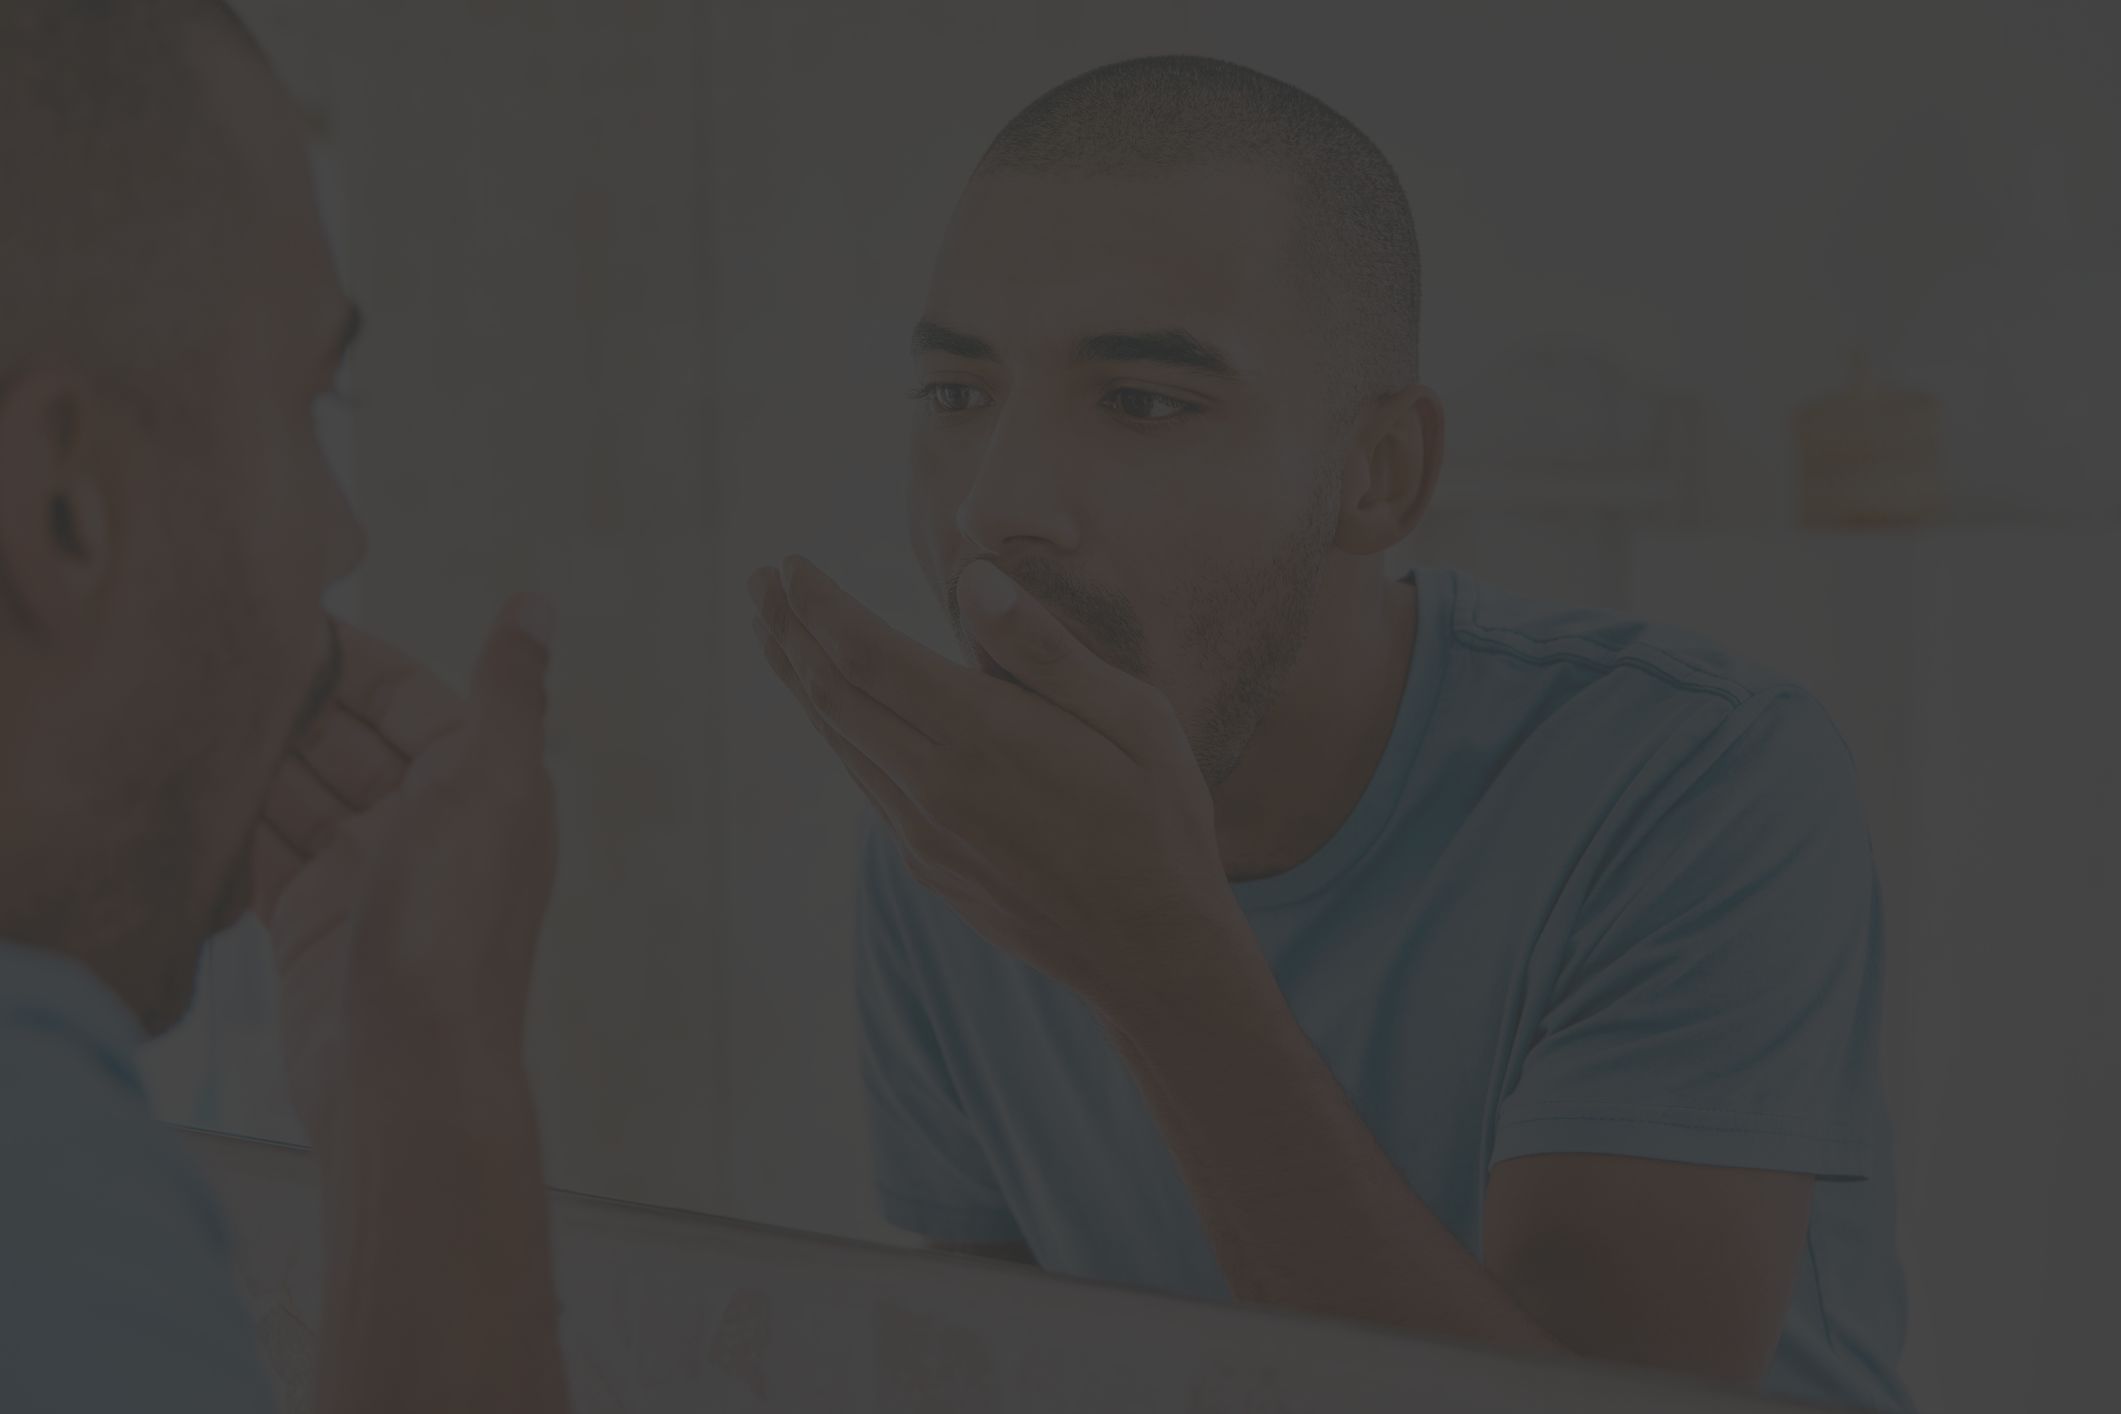 man checking his breath in the bathroom mirror